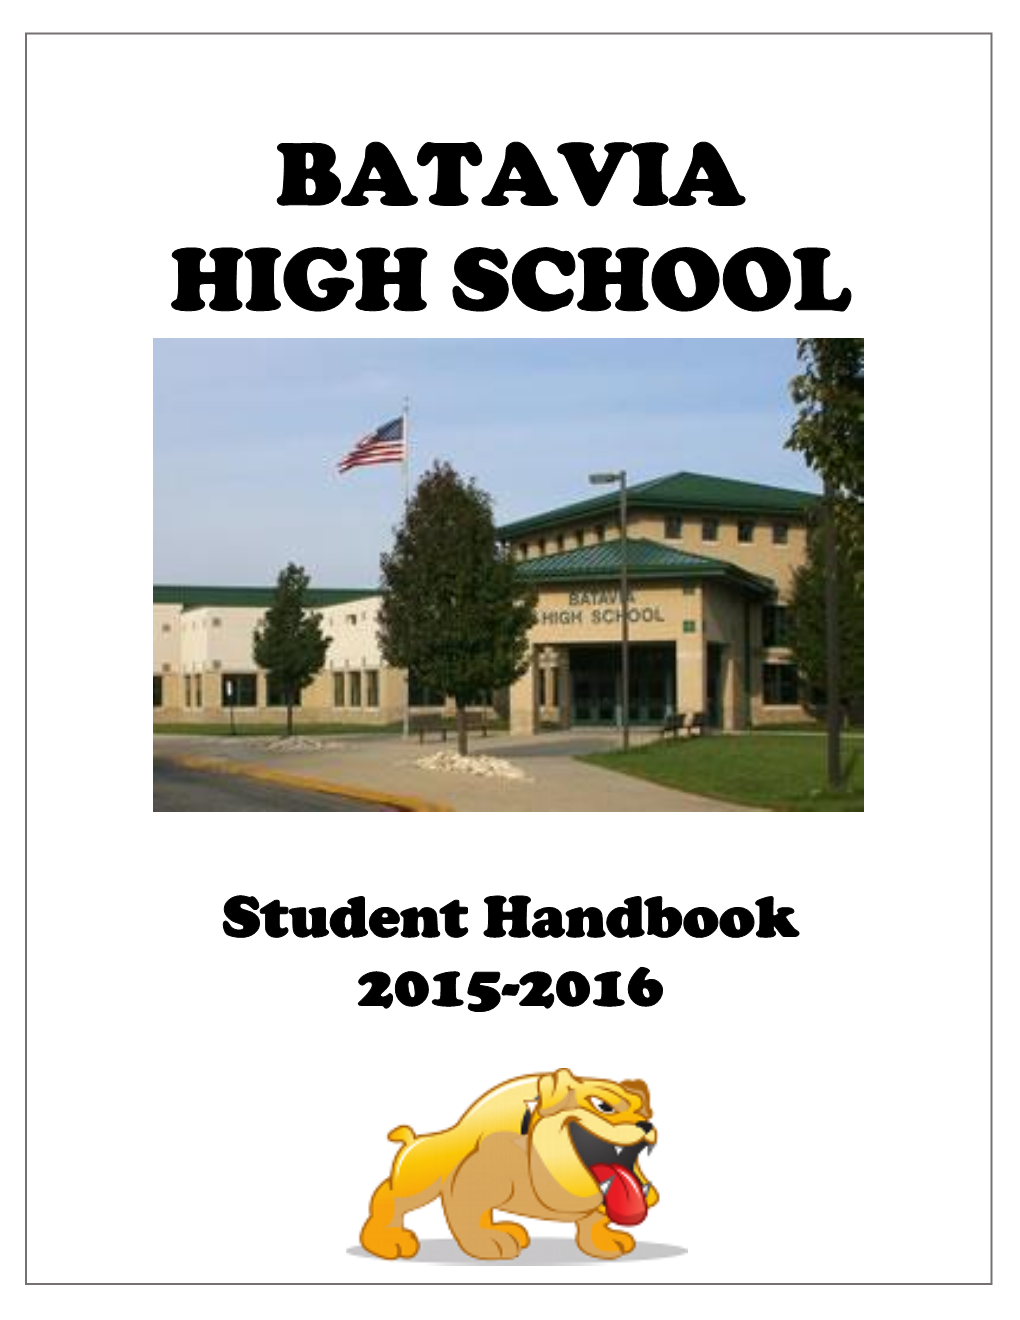 Batavia High School Student Handbook